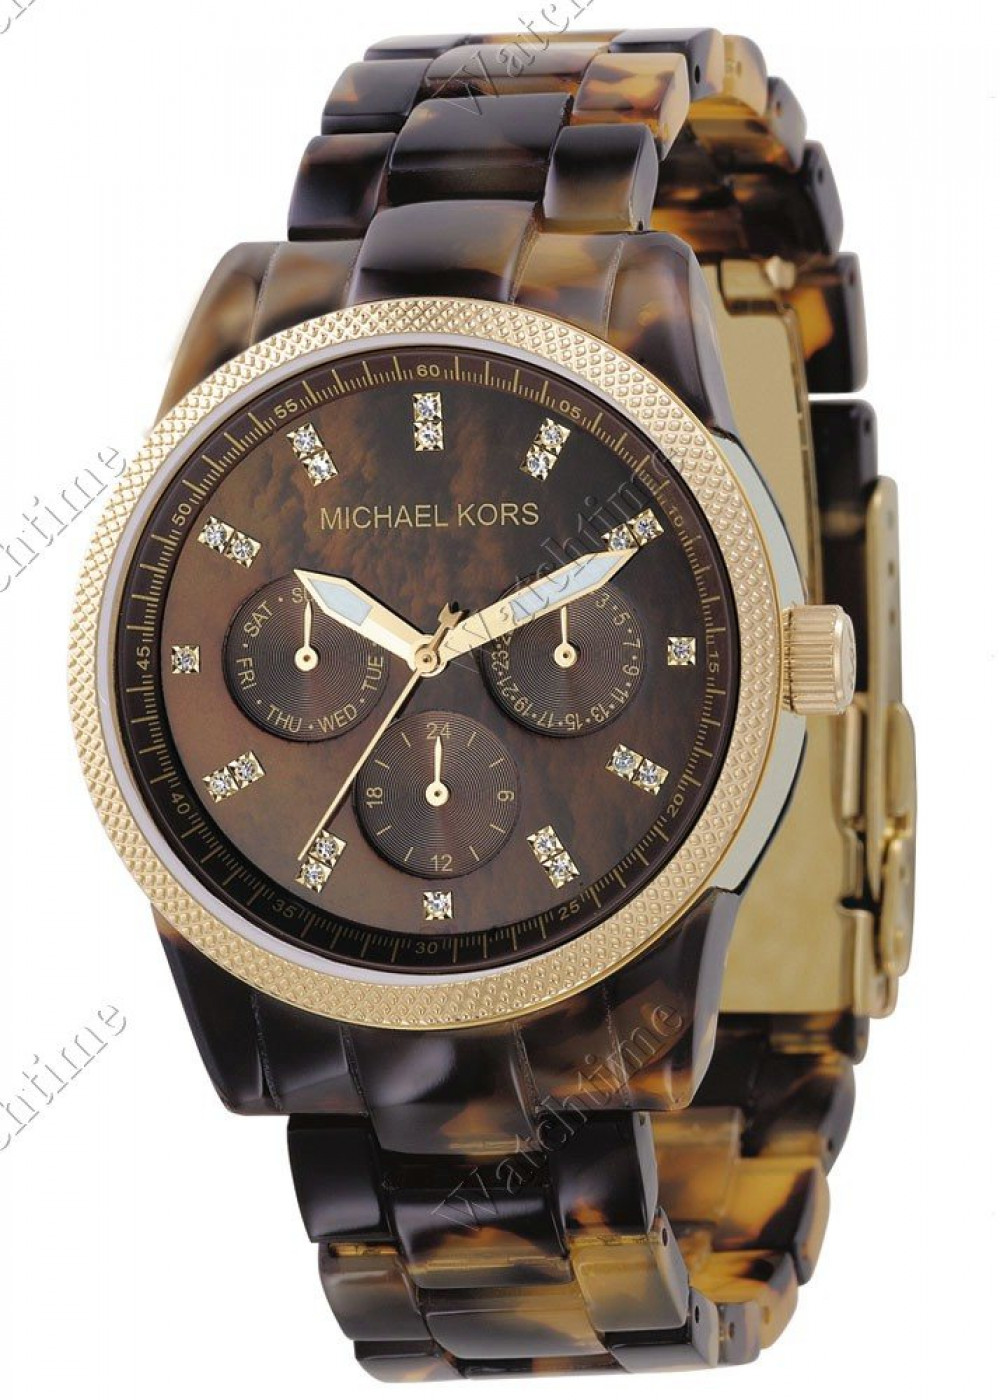 Zegarek firmy Michael Kors, model MK 5038